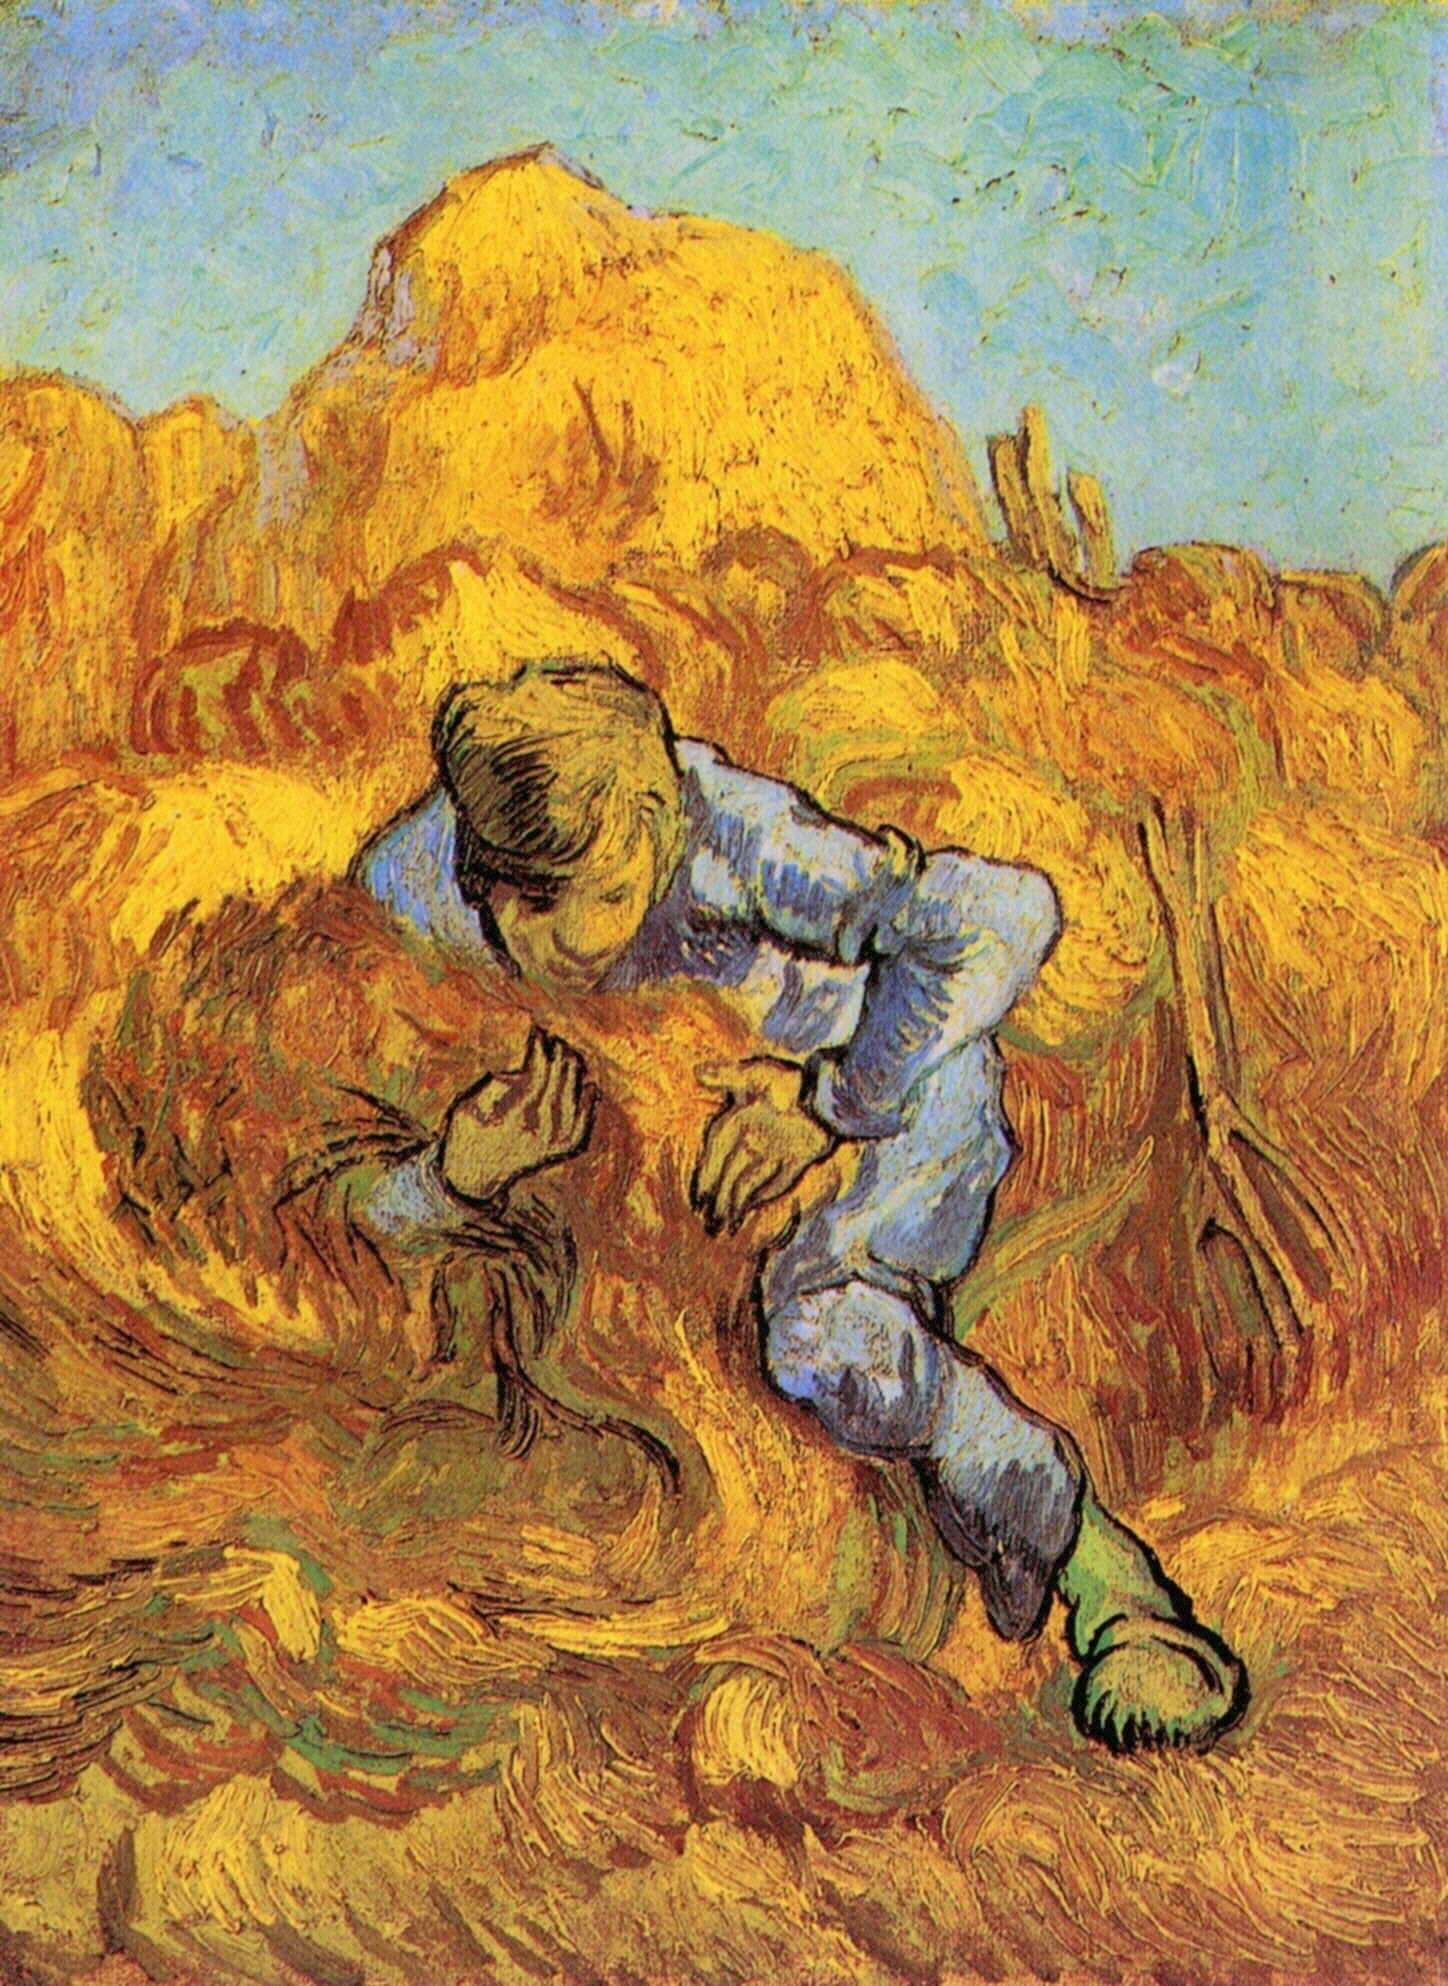 Sheaf-Binder, The after Millet - Van Gogh Painting On Canvas